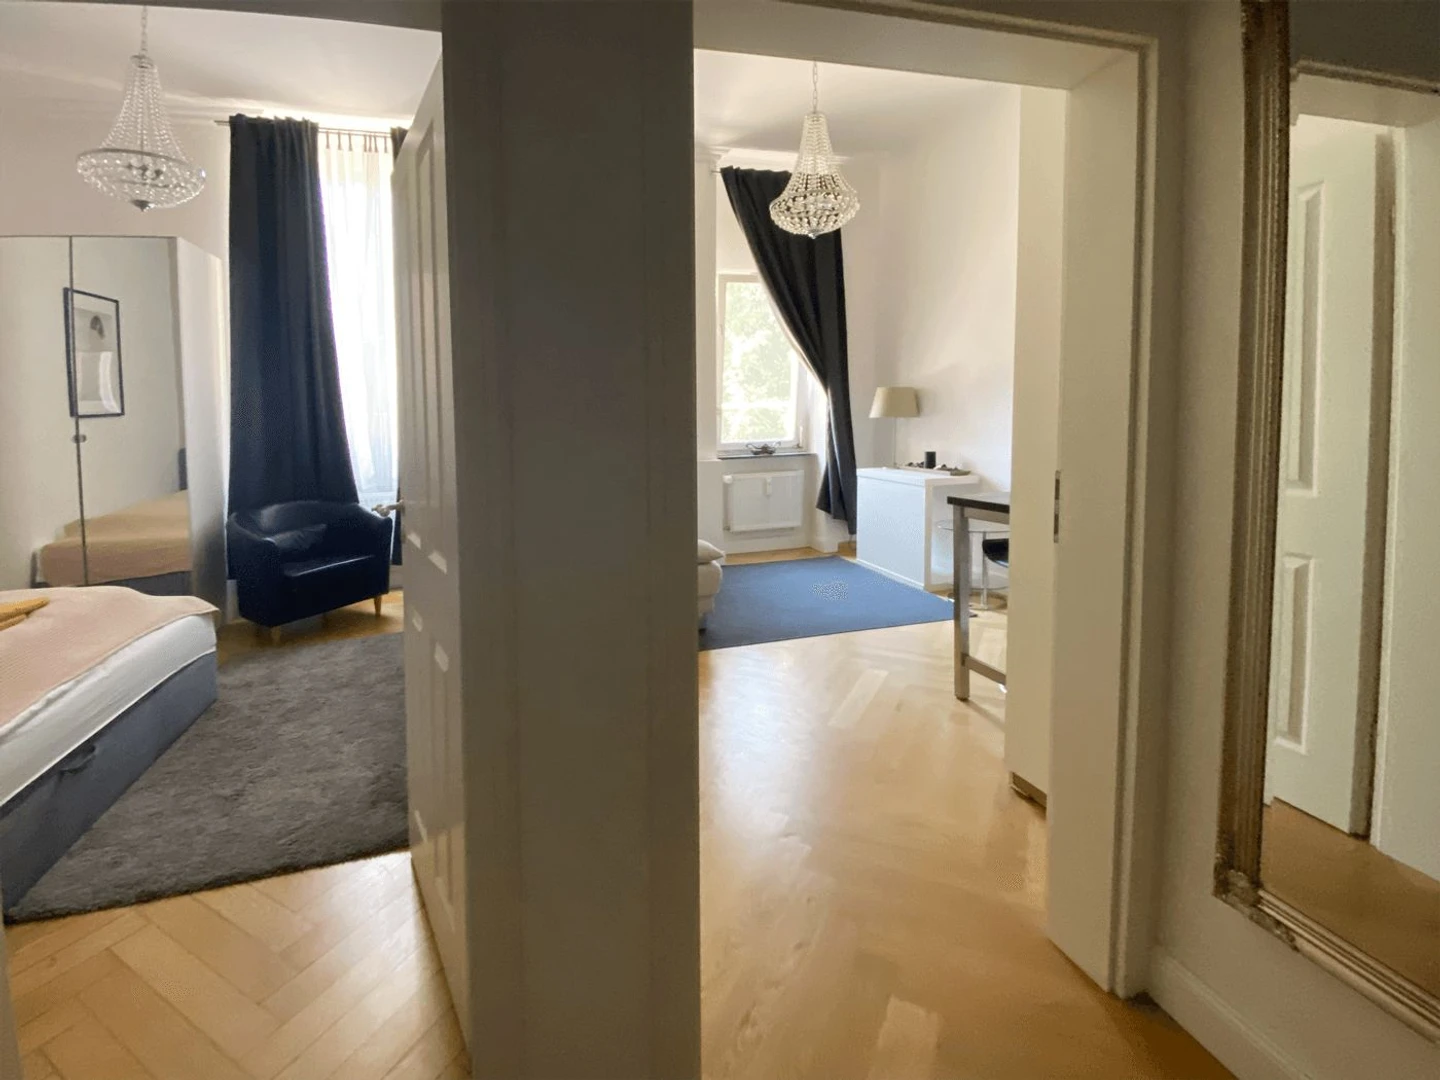 Location mensuelle de chambres à Wiesbaden